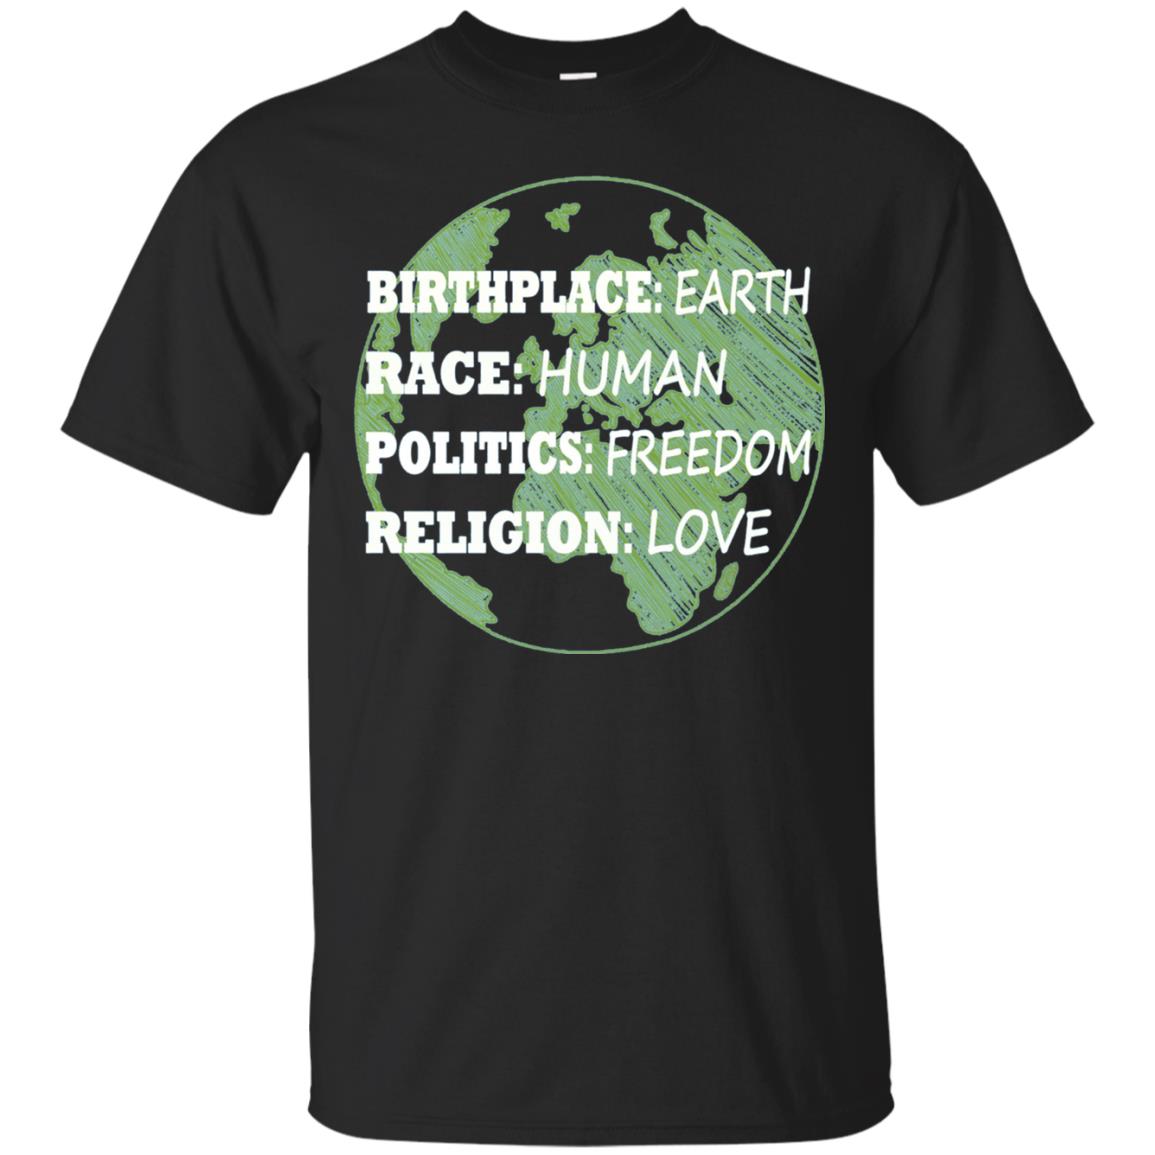 Birthplace Earth Race Human Politics Freedom Love T-shirt